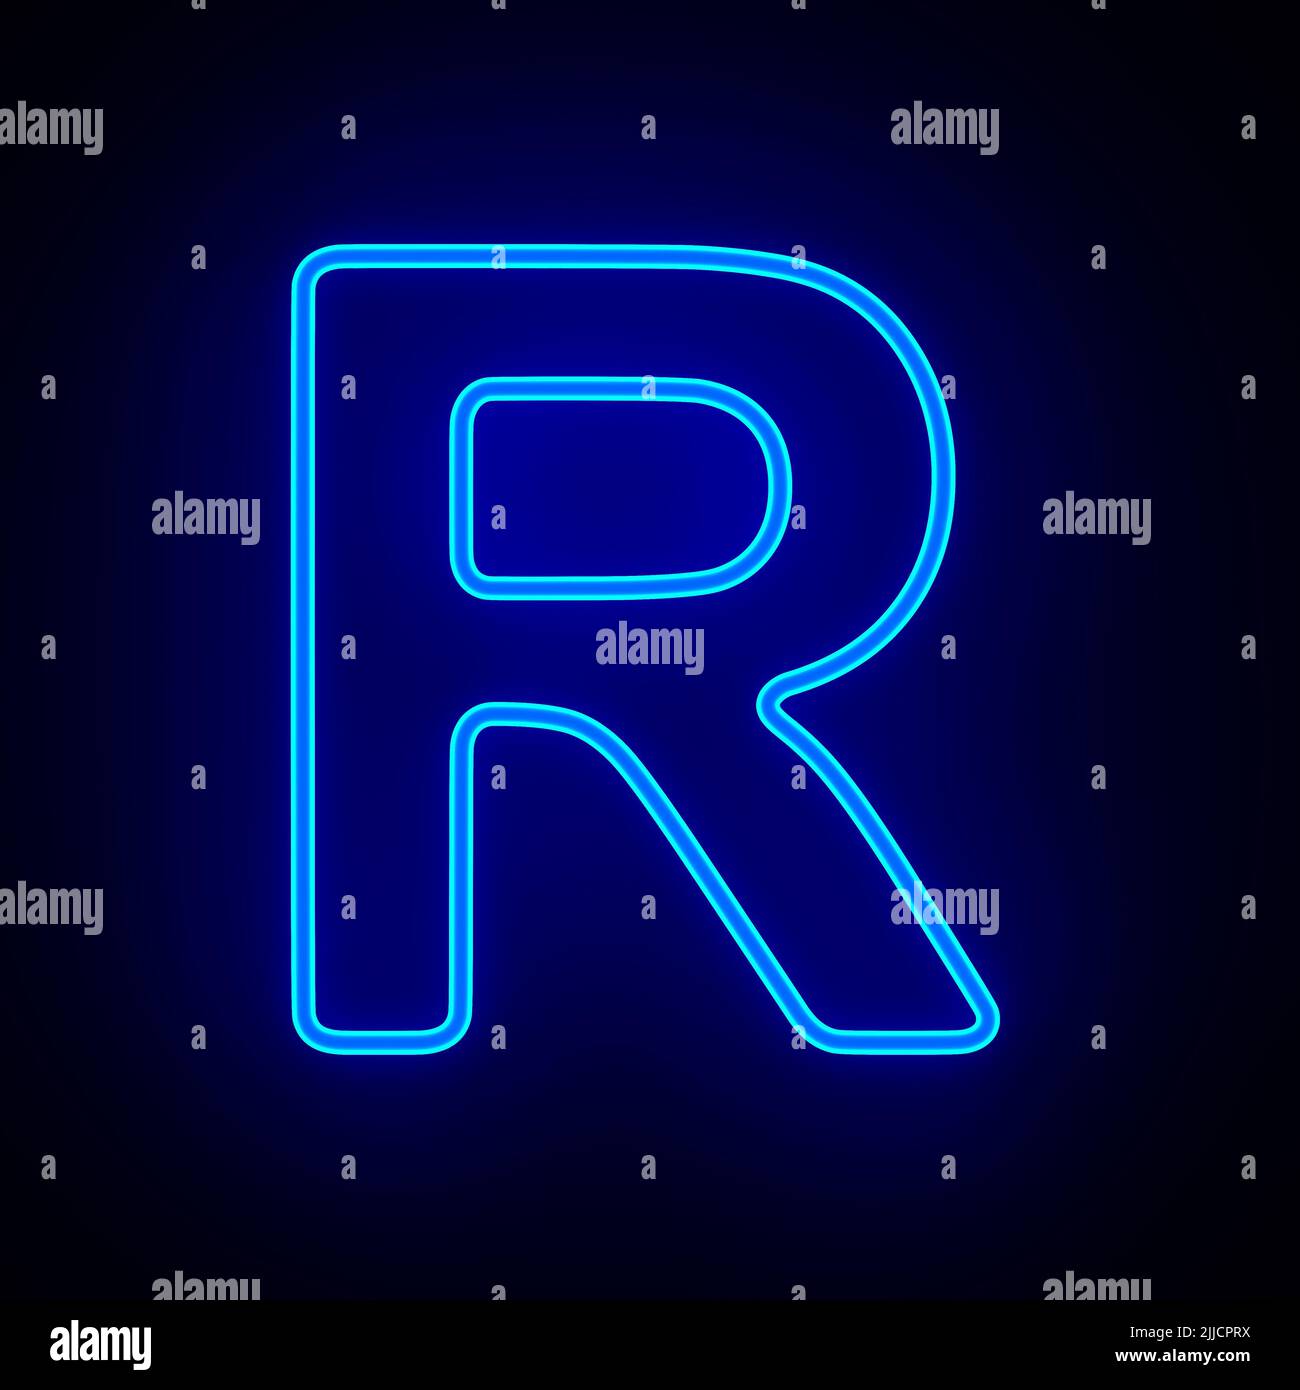 Character R on dark background. 3D illustration Stock Photo